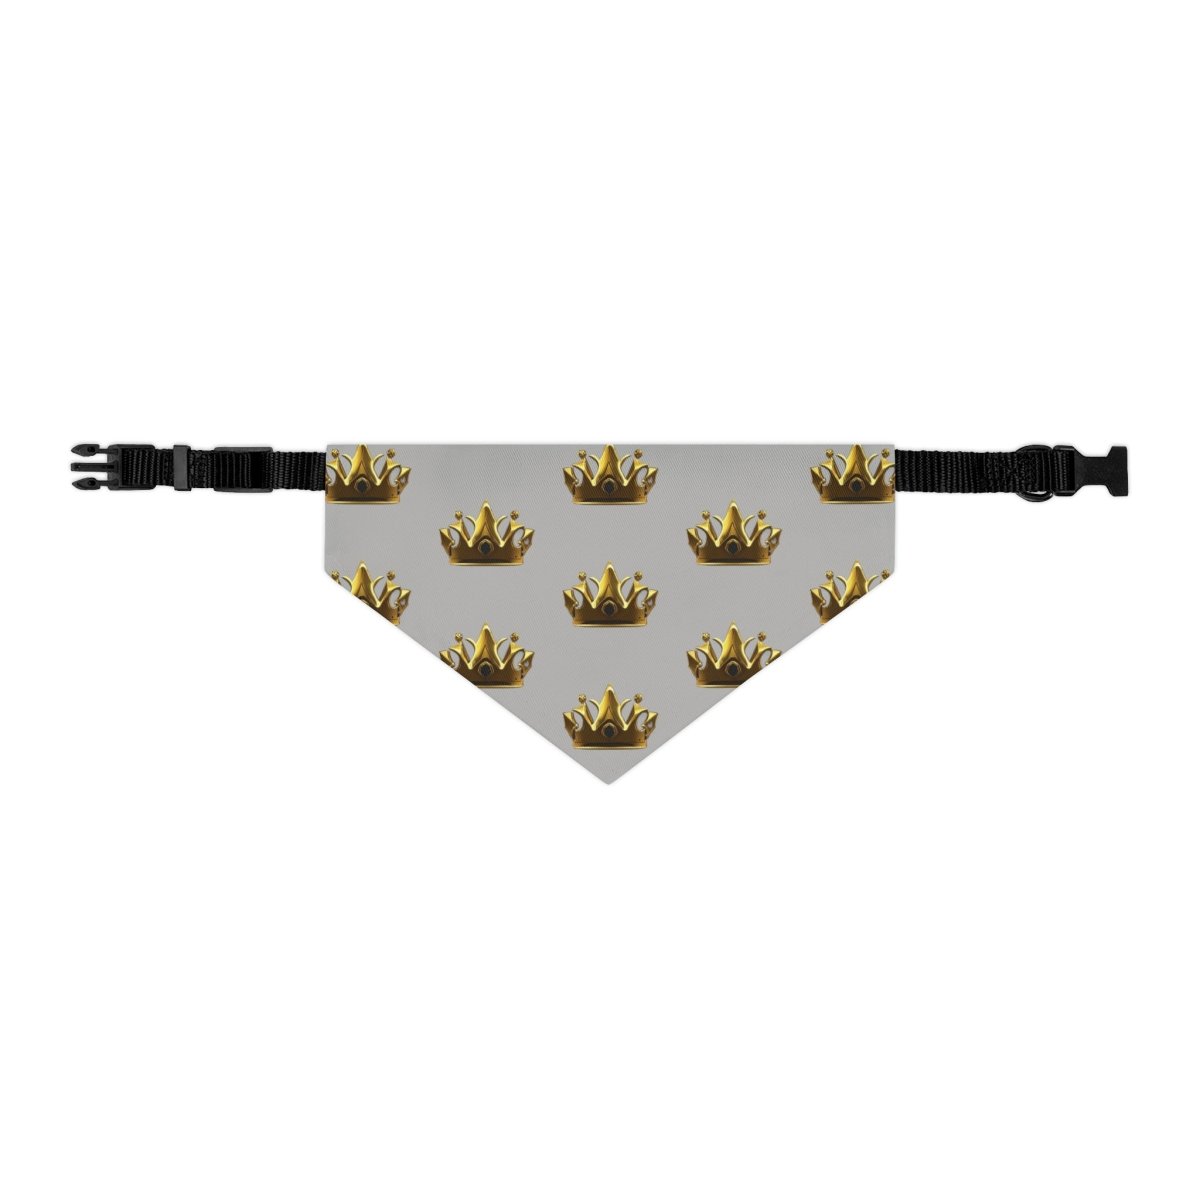 Royal Crown Pet Bandana Collar - Light Gray - DarzyStore